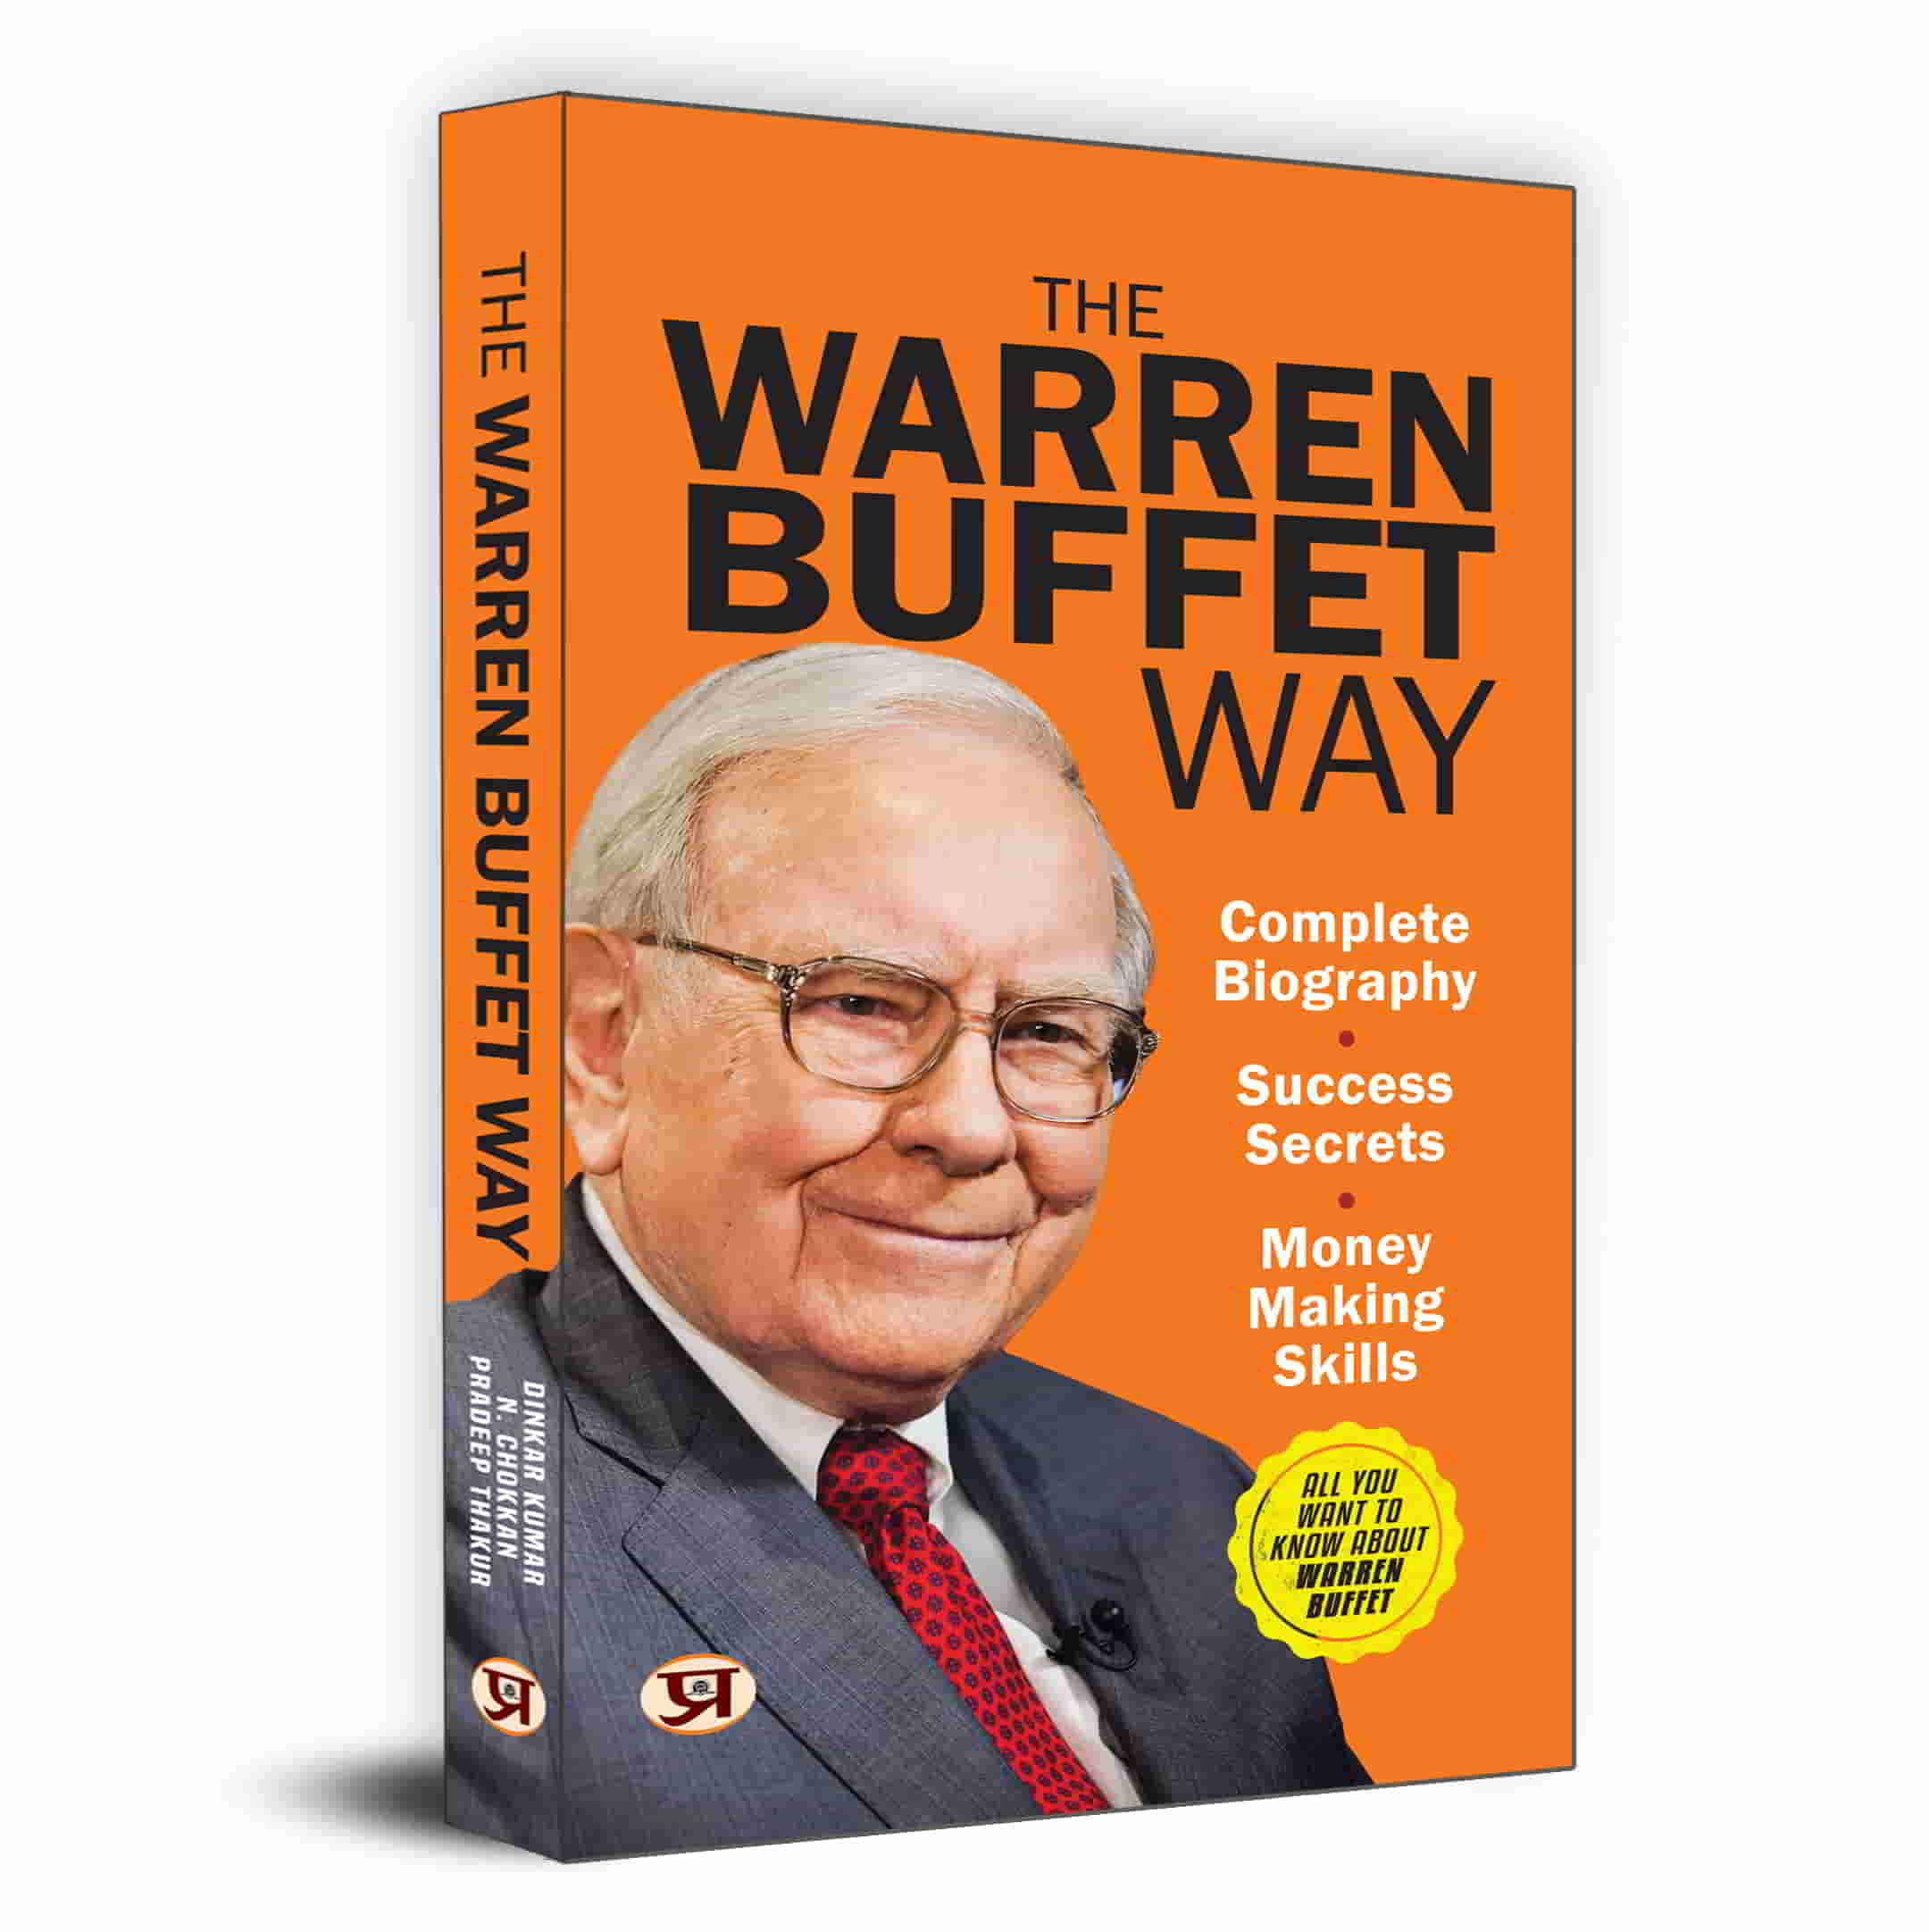 The Warren Buffett Way: Complete Biography, Success Secrets & Money Making Skills